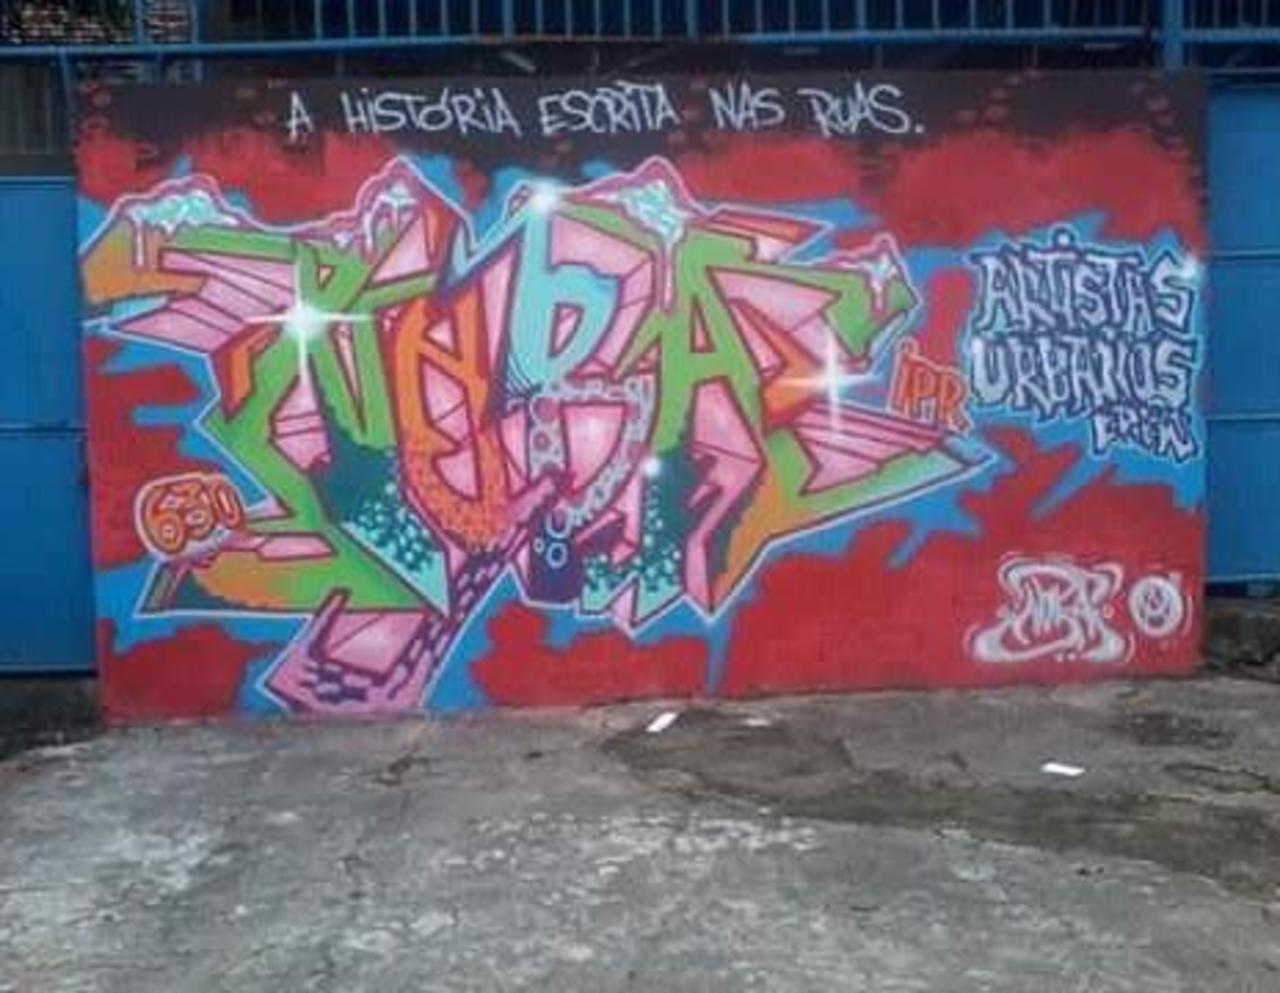 Rua #graffiti #streetartrio #artistasurbanoscrew #rjvandal #streetart #nobã by artistasurbanoscrew http://t.co/deAS6b6d4H